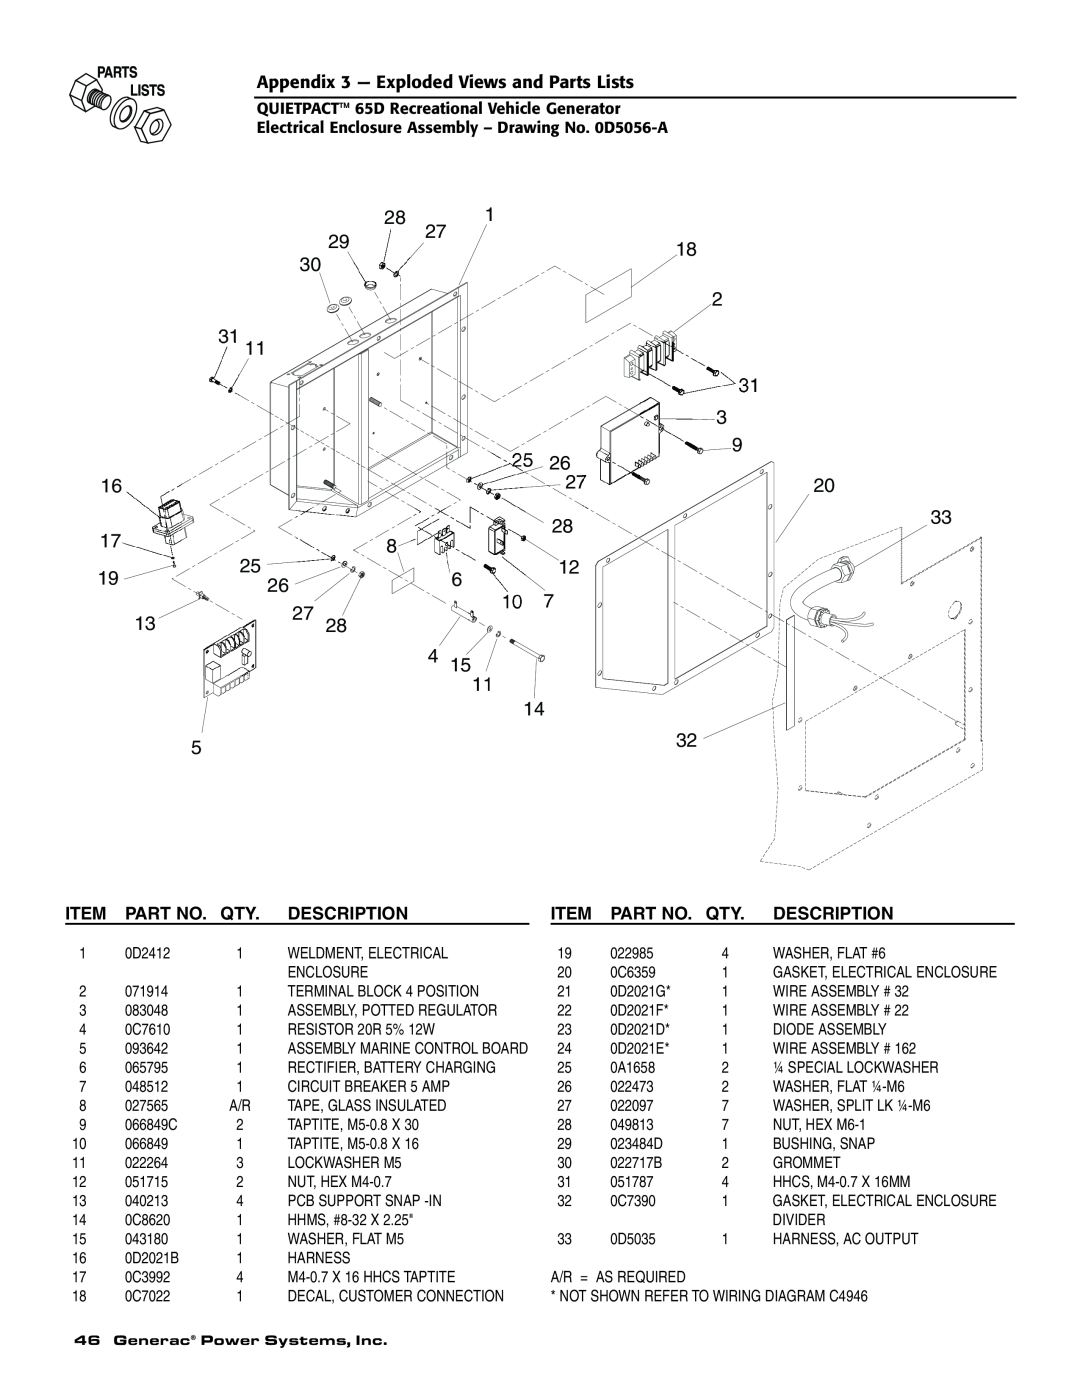 Generac 004614-1 owner manual 1926, 4 15, Appendix 3 - Exploded Views and Parts Lists, Description 